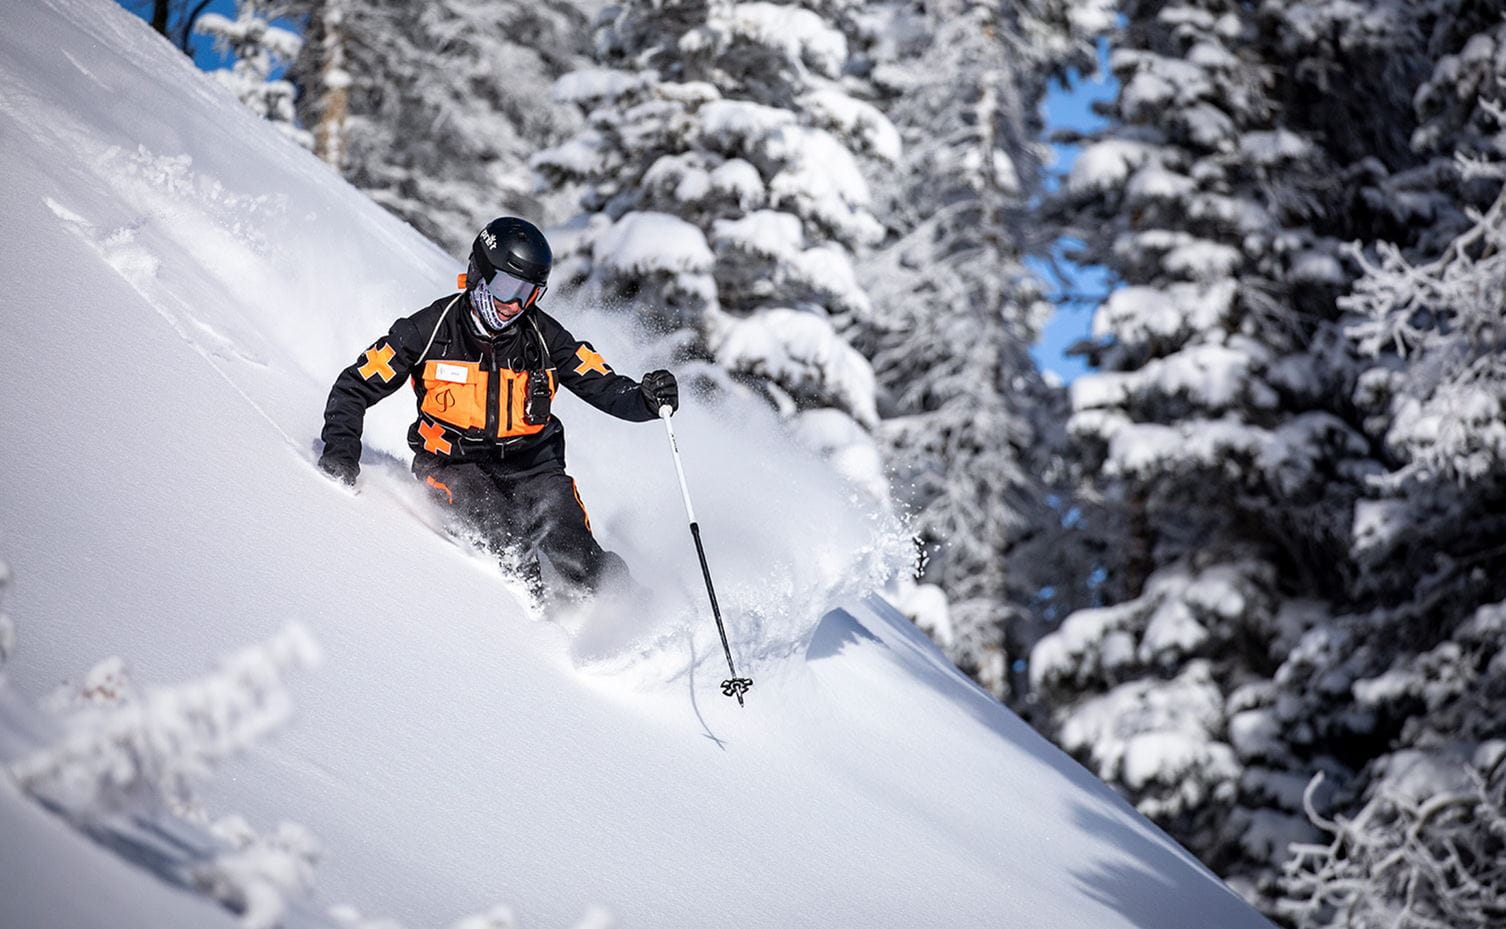 A ski patrol skier navigates a ski run at Aspen Snowmass